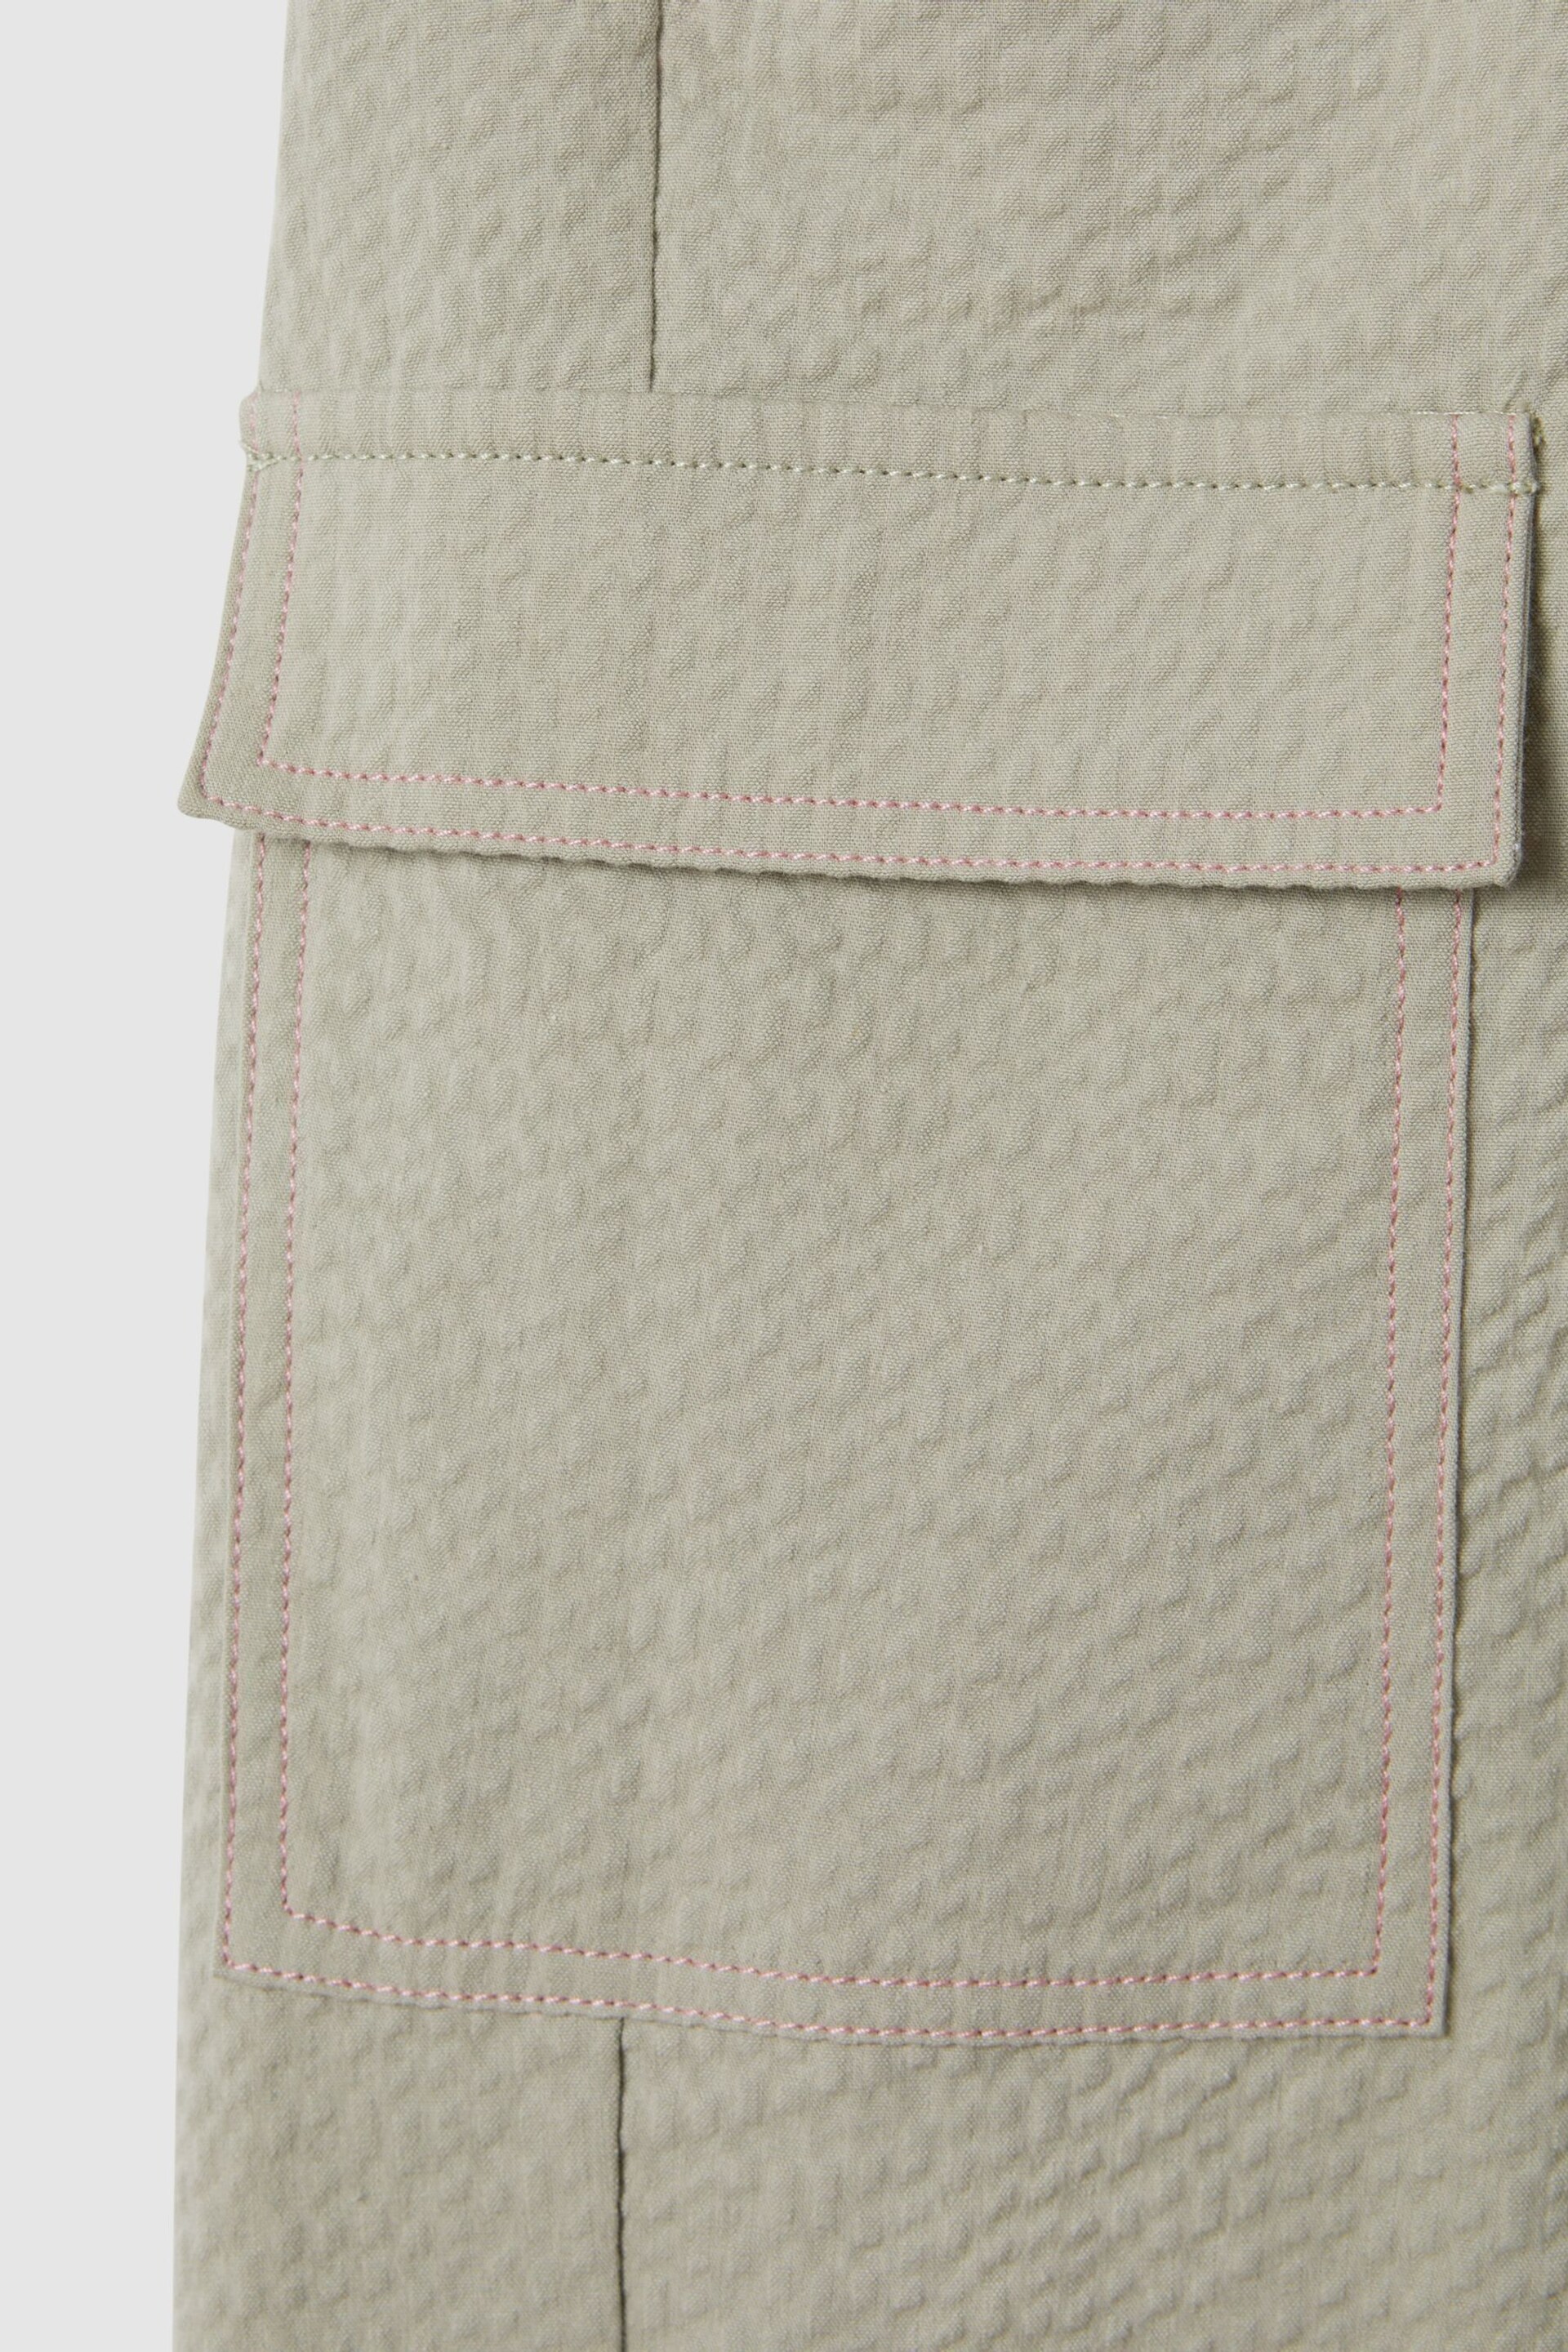 Reiss Khaki Bax Teen Textured Cargo Trousers - Image 6 of 6